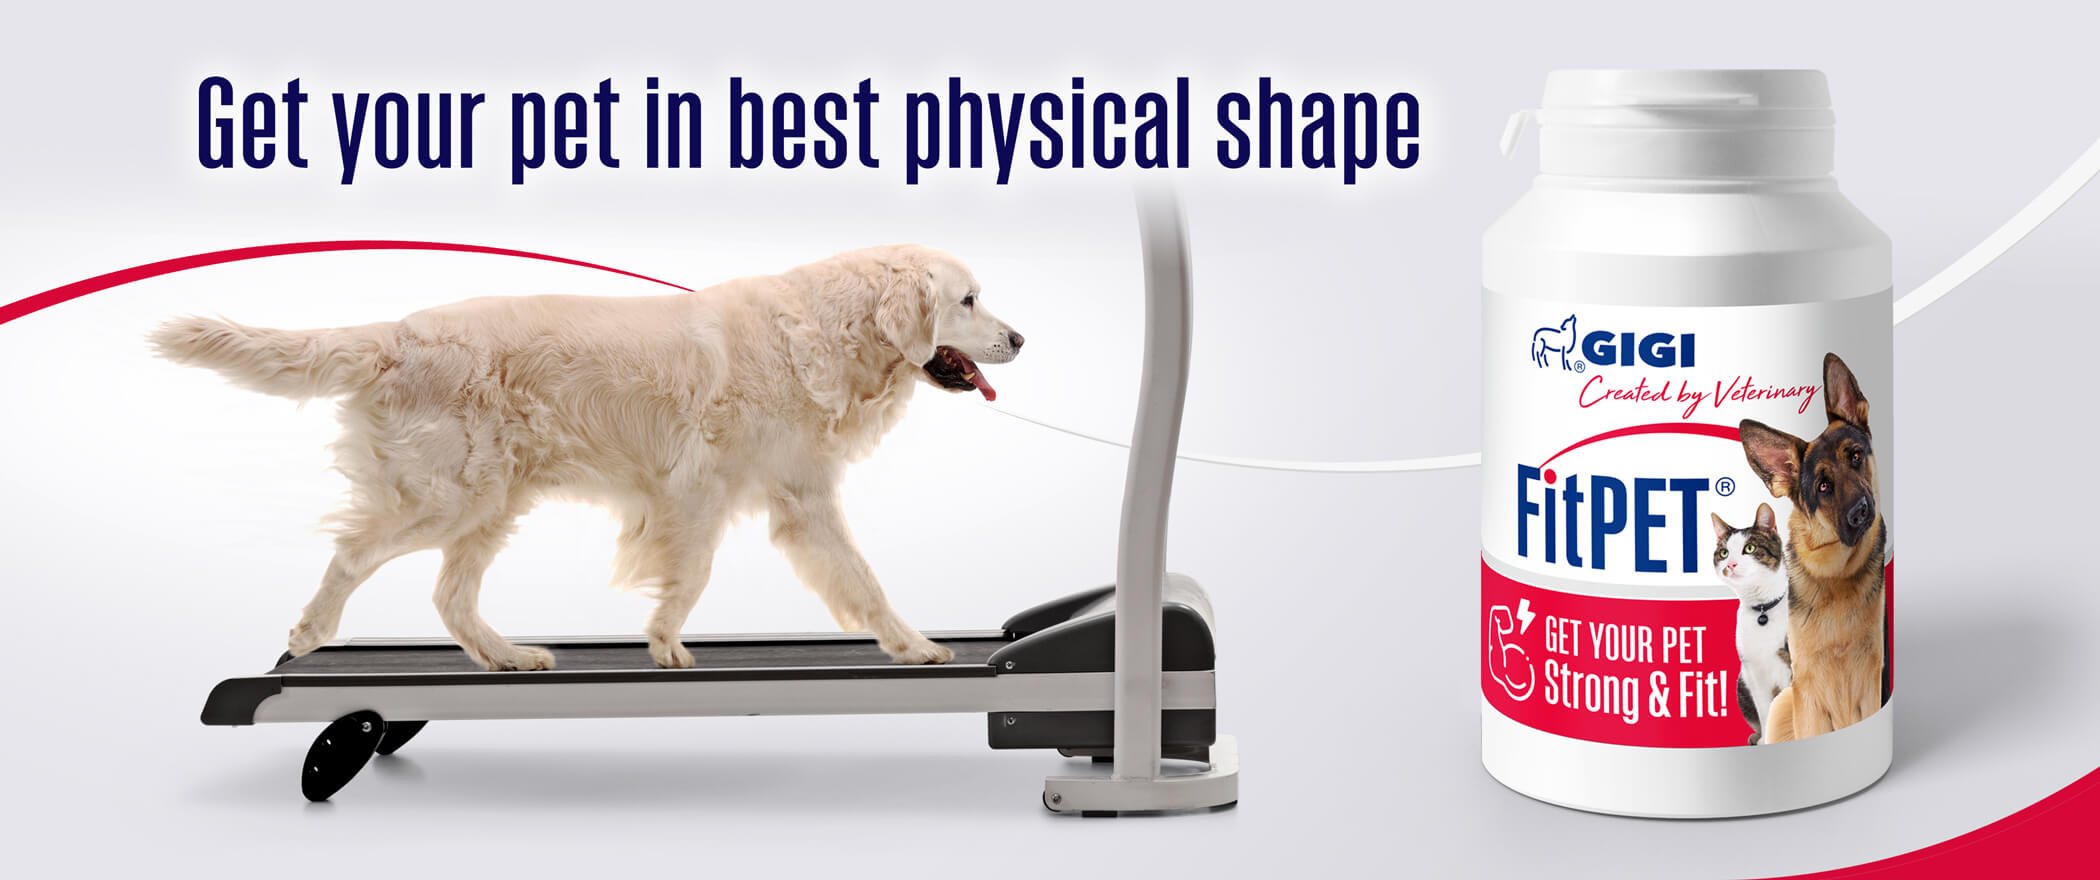 Get your pet in shape with gigi vet fitpet.